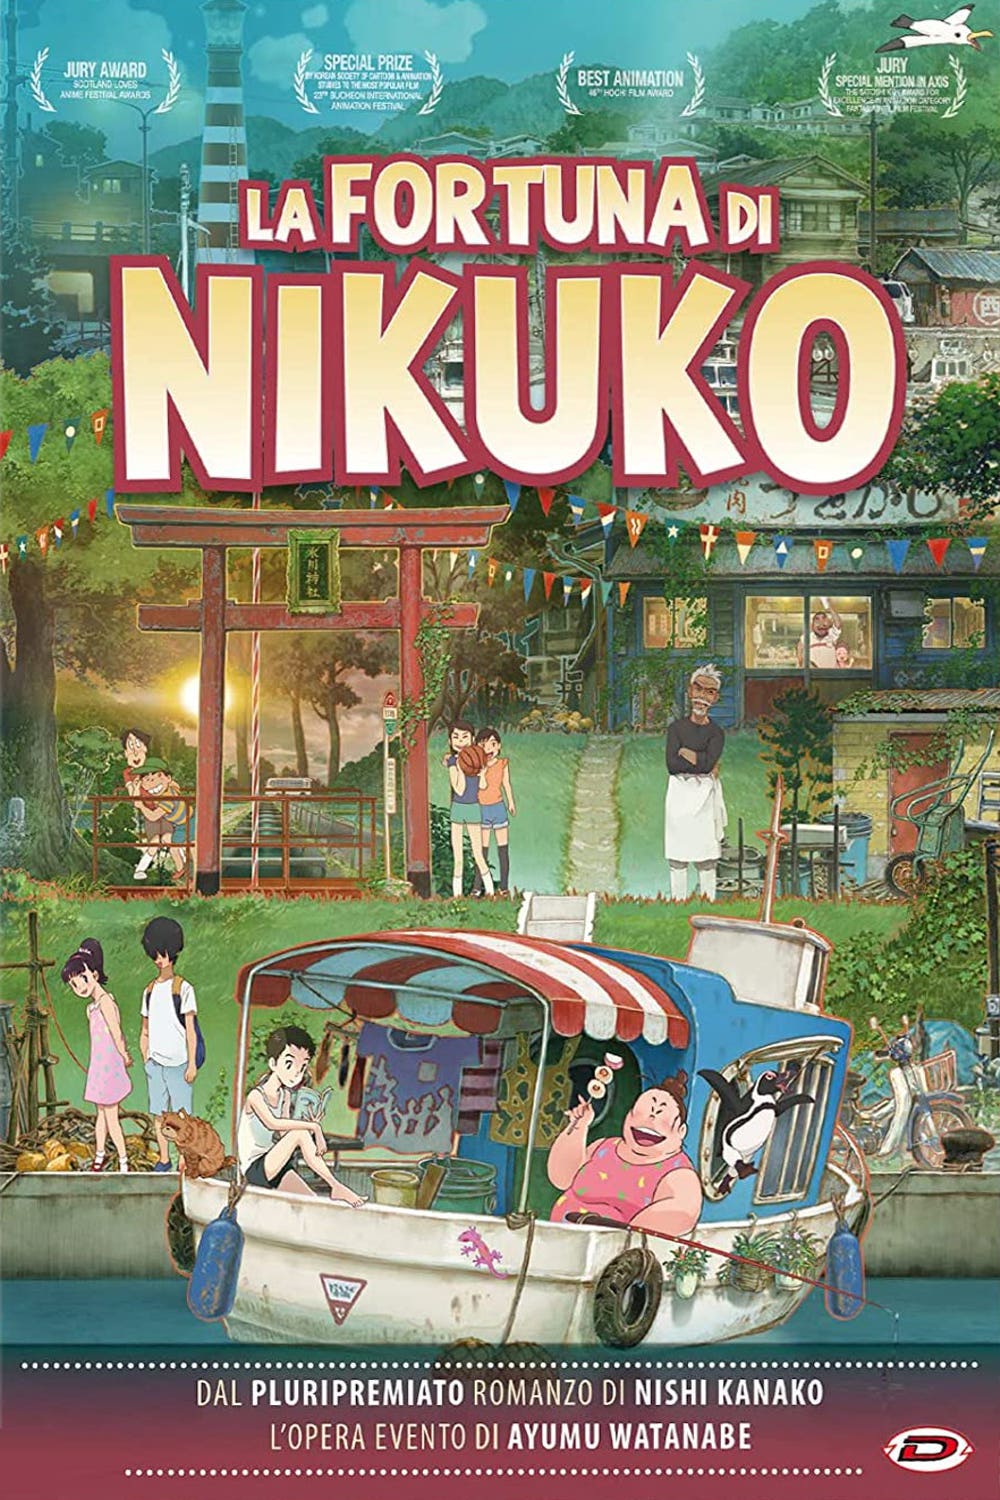 La fortuna di Nikuko [HD] (2021)